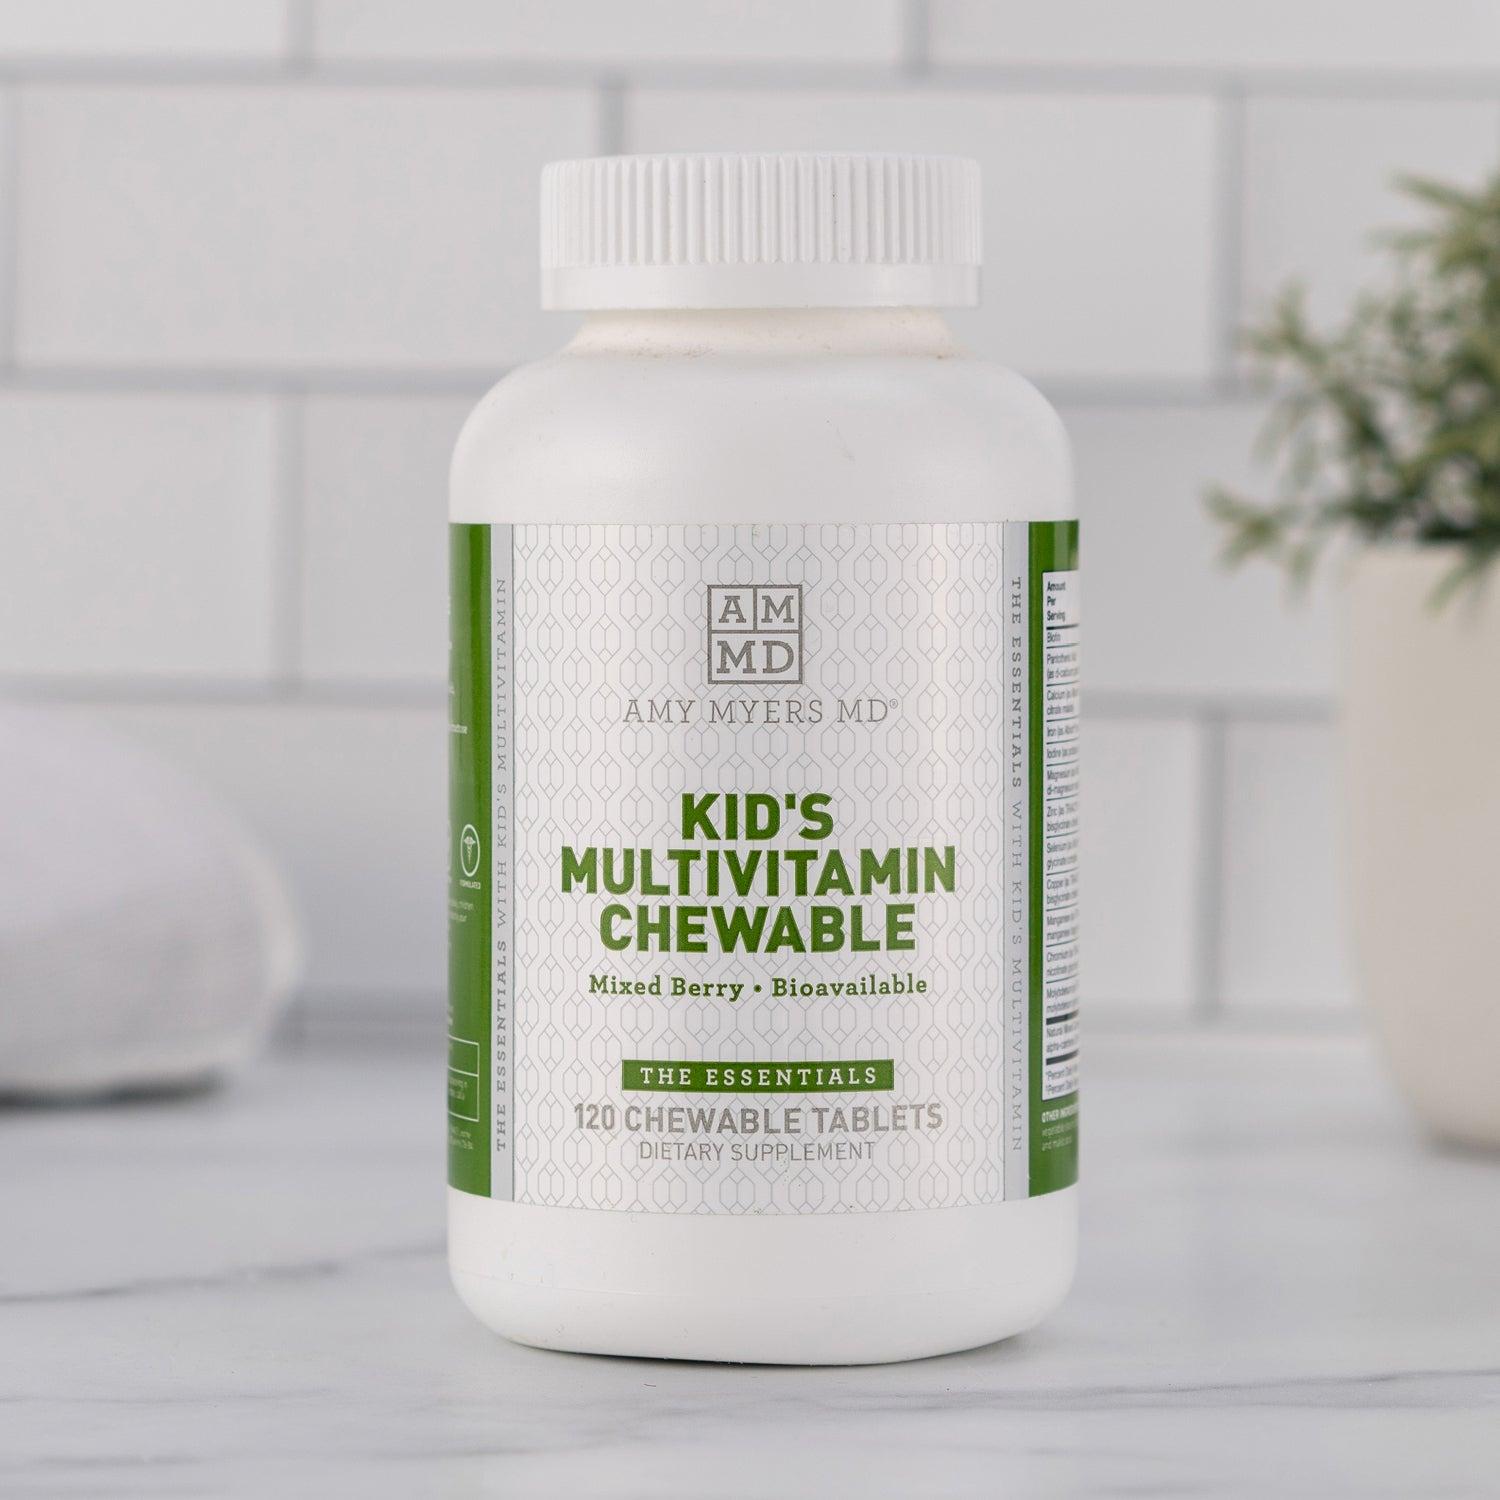 Kids Multivitamin Chewable bottle - multivitamin for kids - dietary supplement - Amy Myers MD®